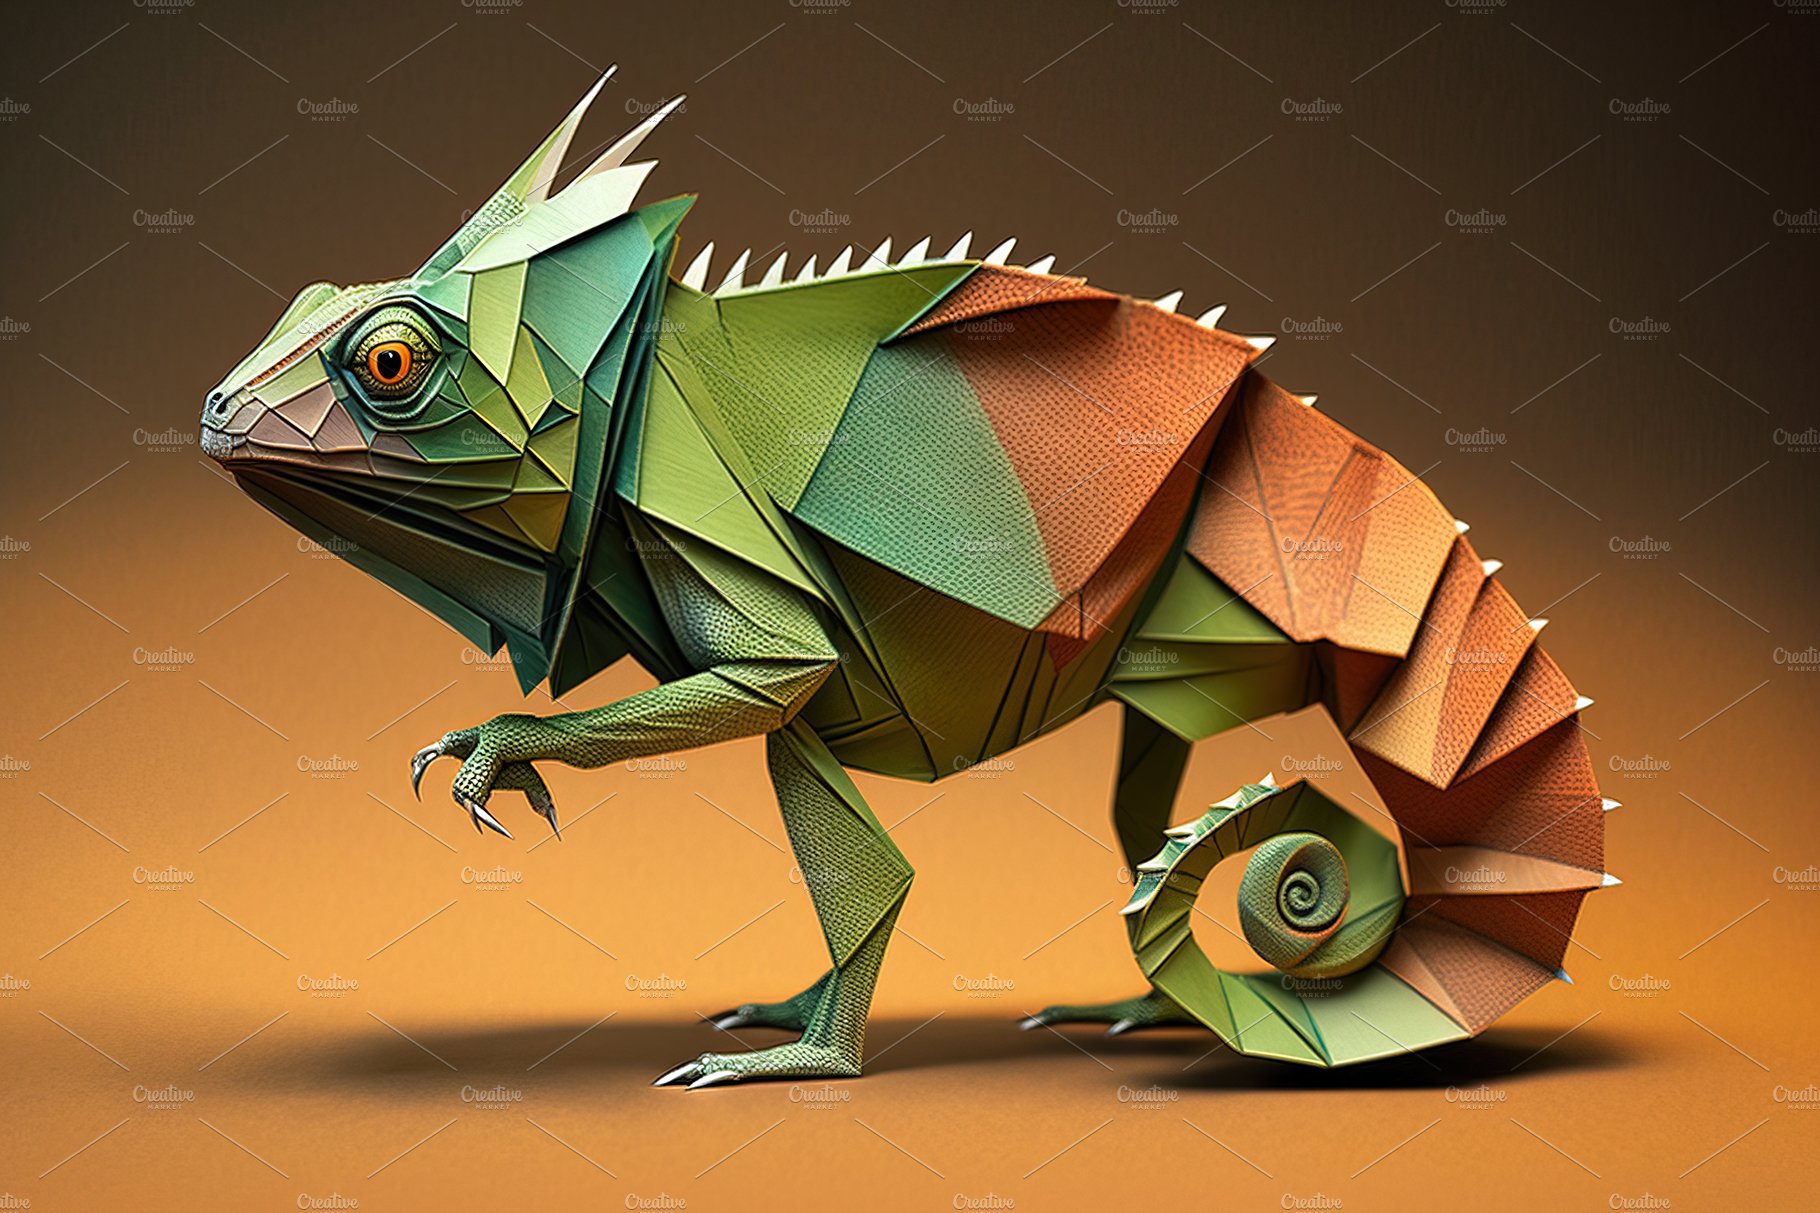 Chameleon paper origami art. Reptile cover image.